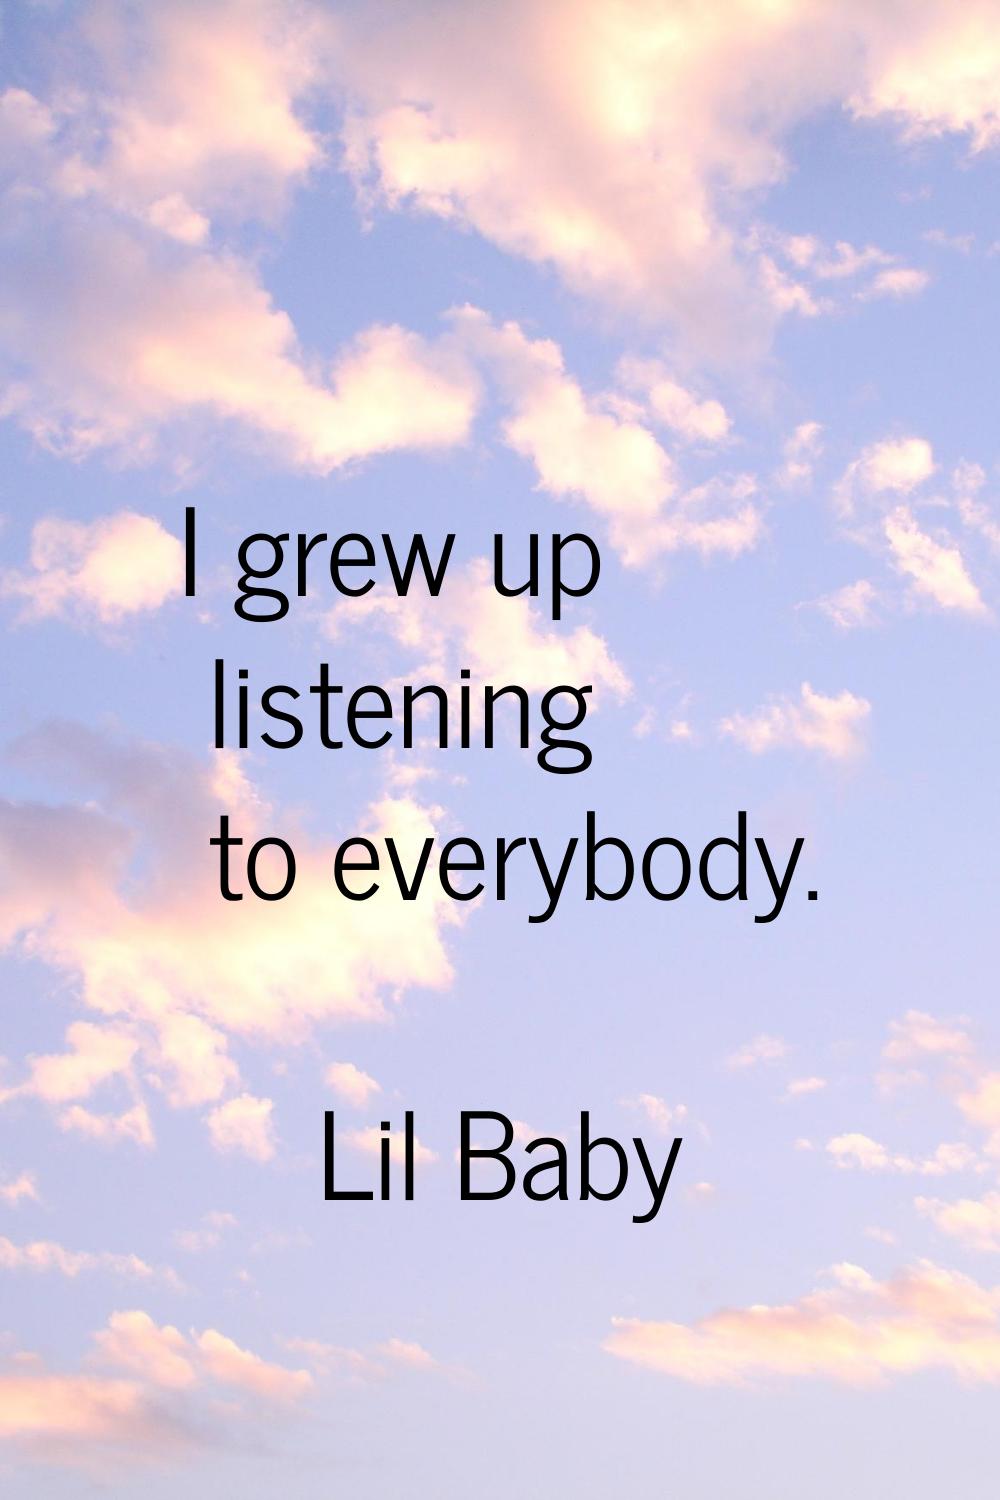 I grew up listening to everybody.